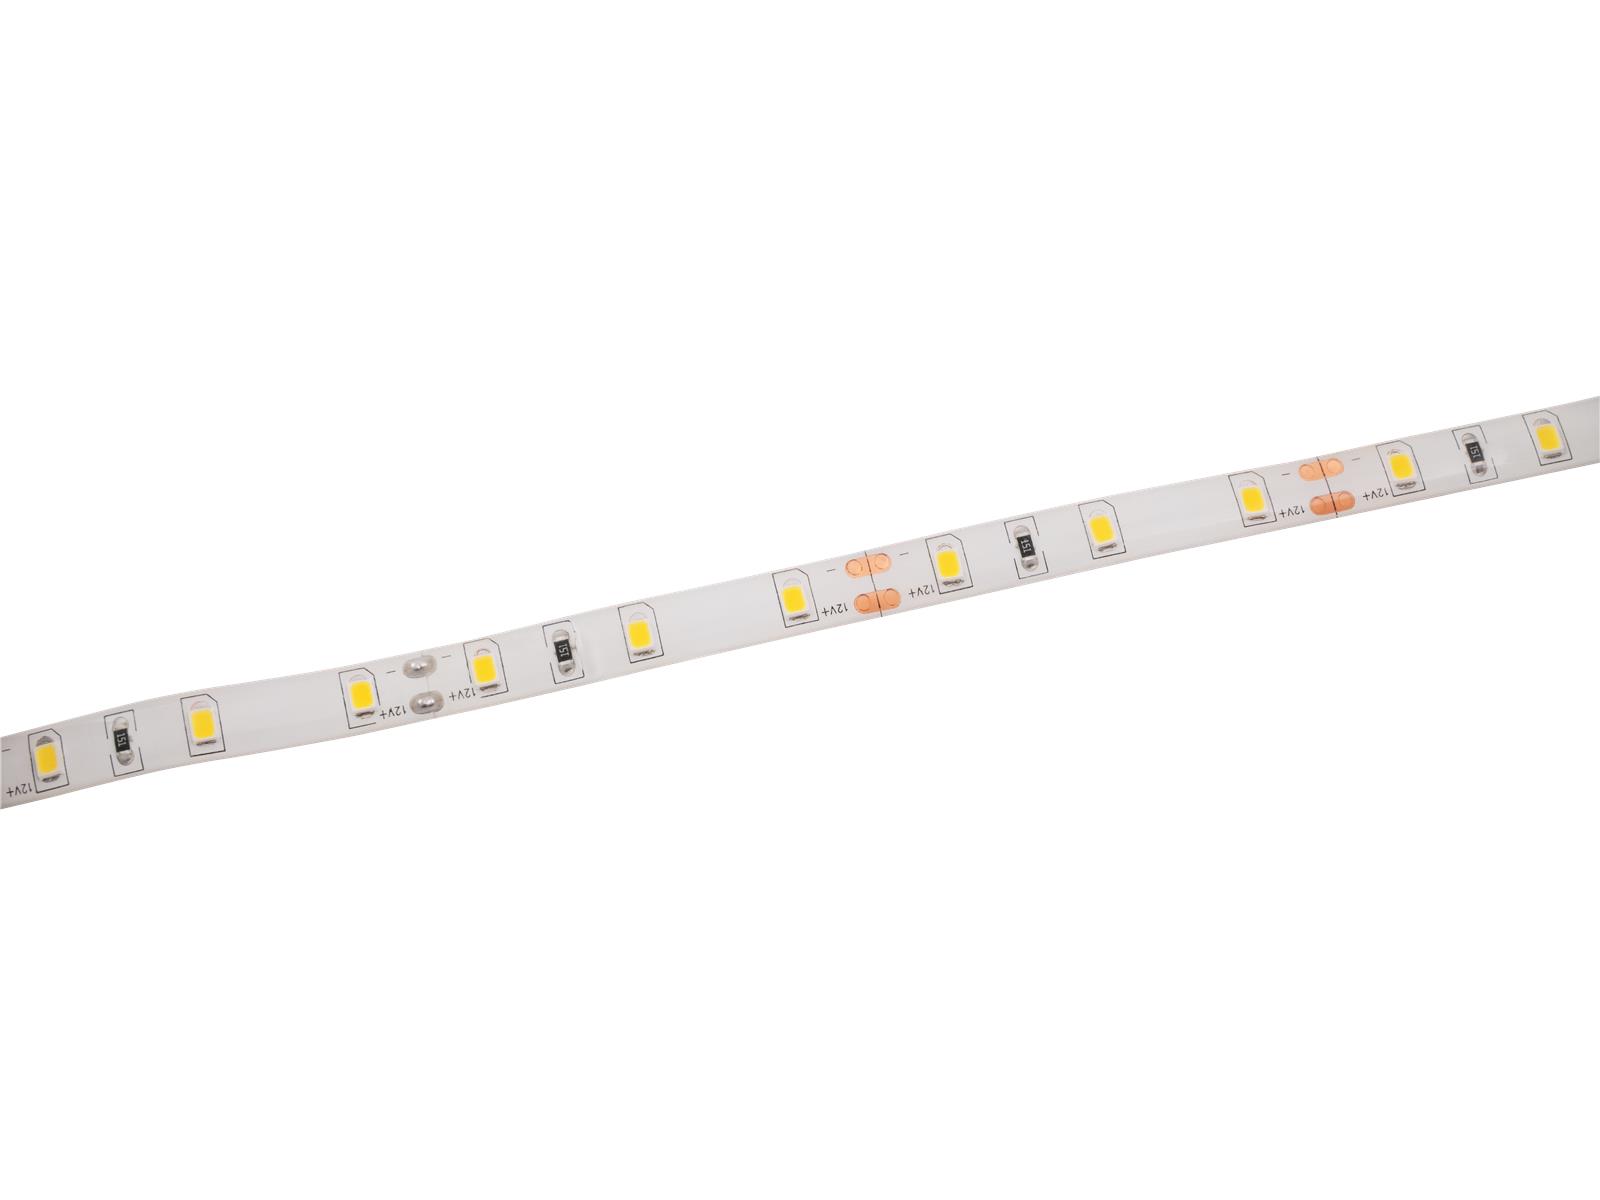 LED-Stripe McShine, 5m, warmweiß, 300LEDs, 6000lm, 12V/24W, IP44